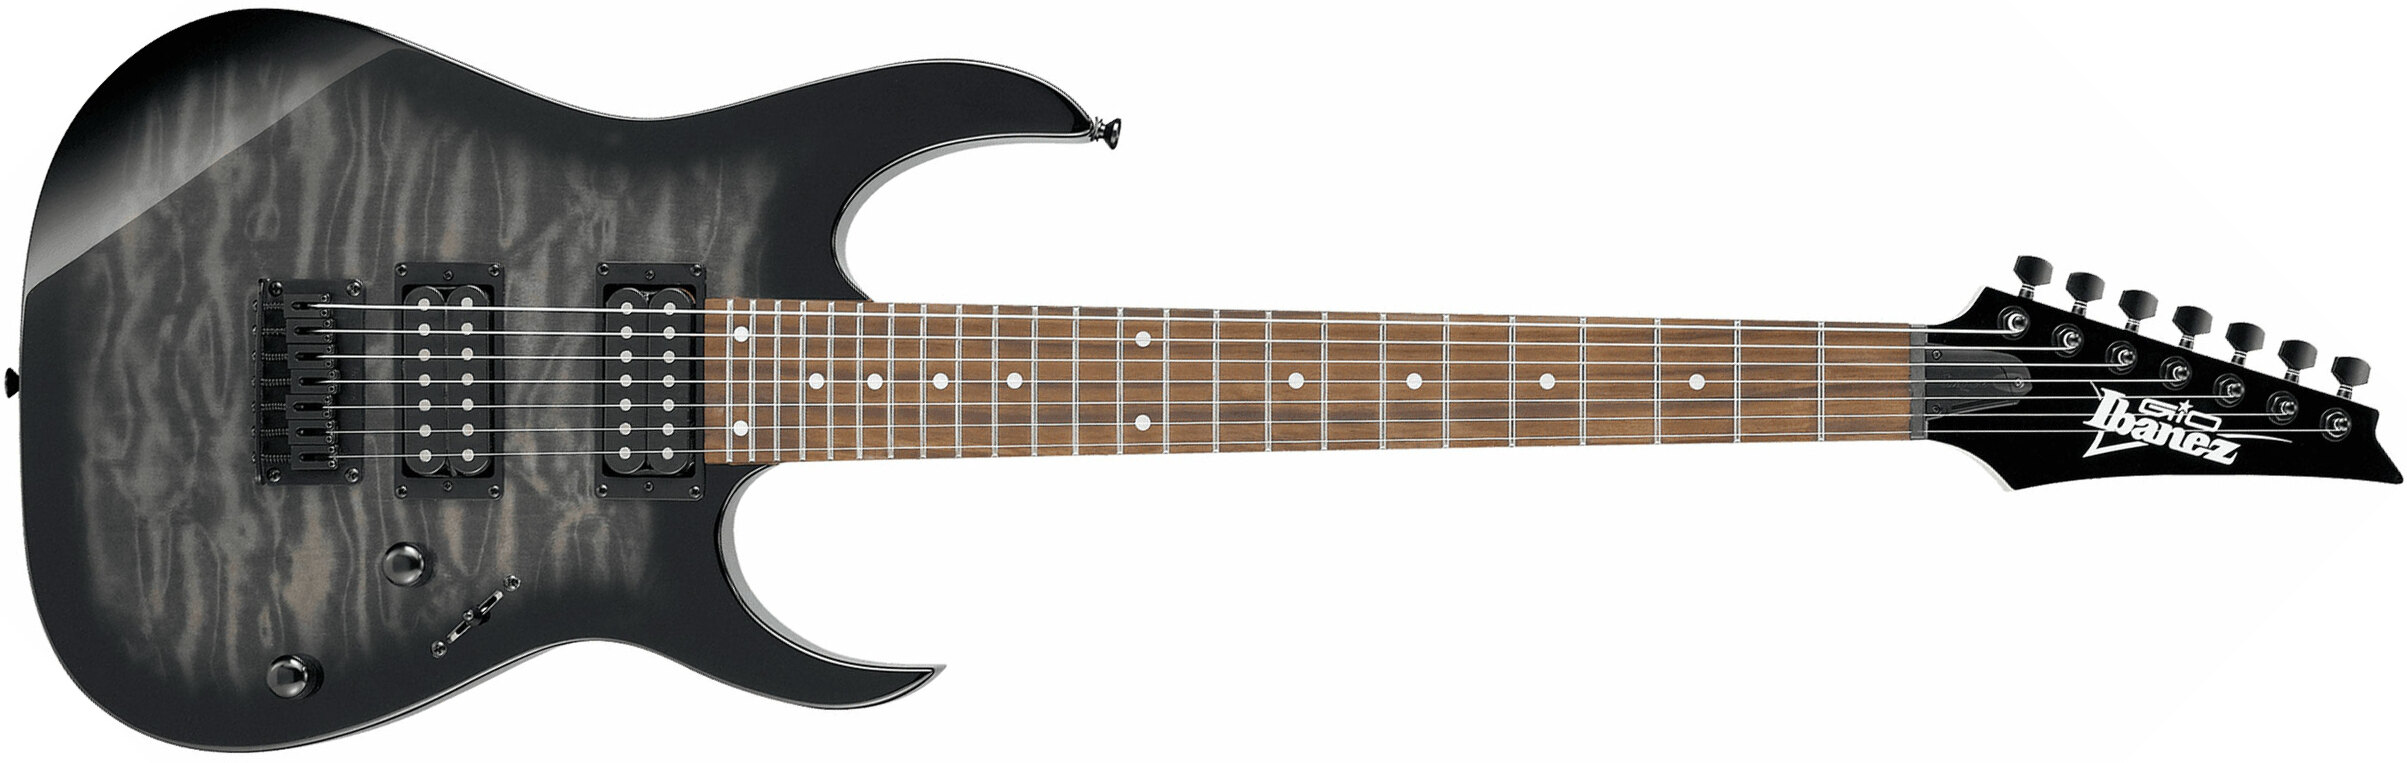 Ibanez Grg7221qa Tks Standard Hh Ht Nzp - Trans Black Sunburst - 7-snarige elektrische gitaar - Main picture